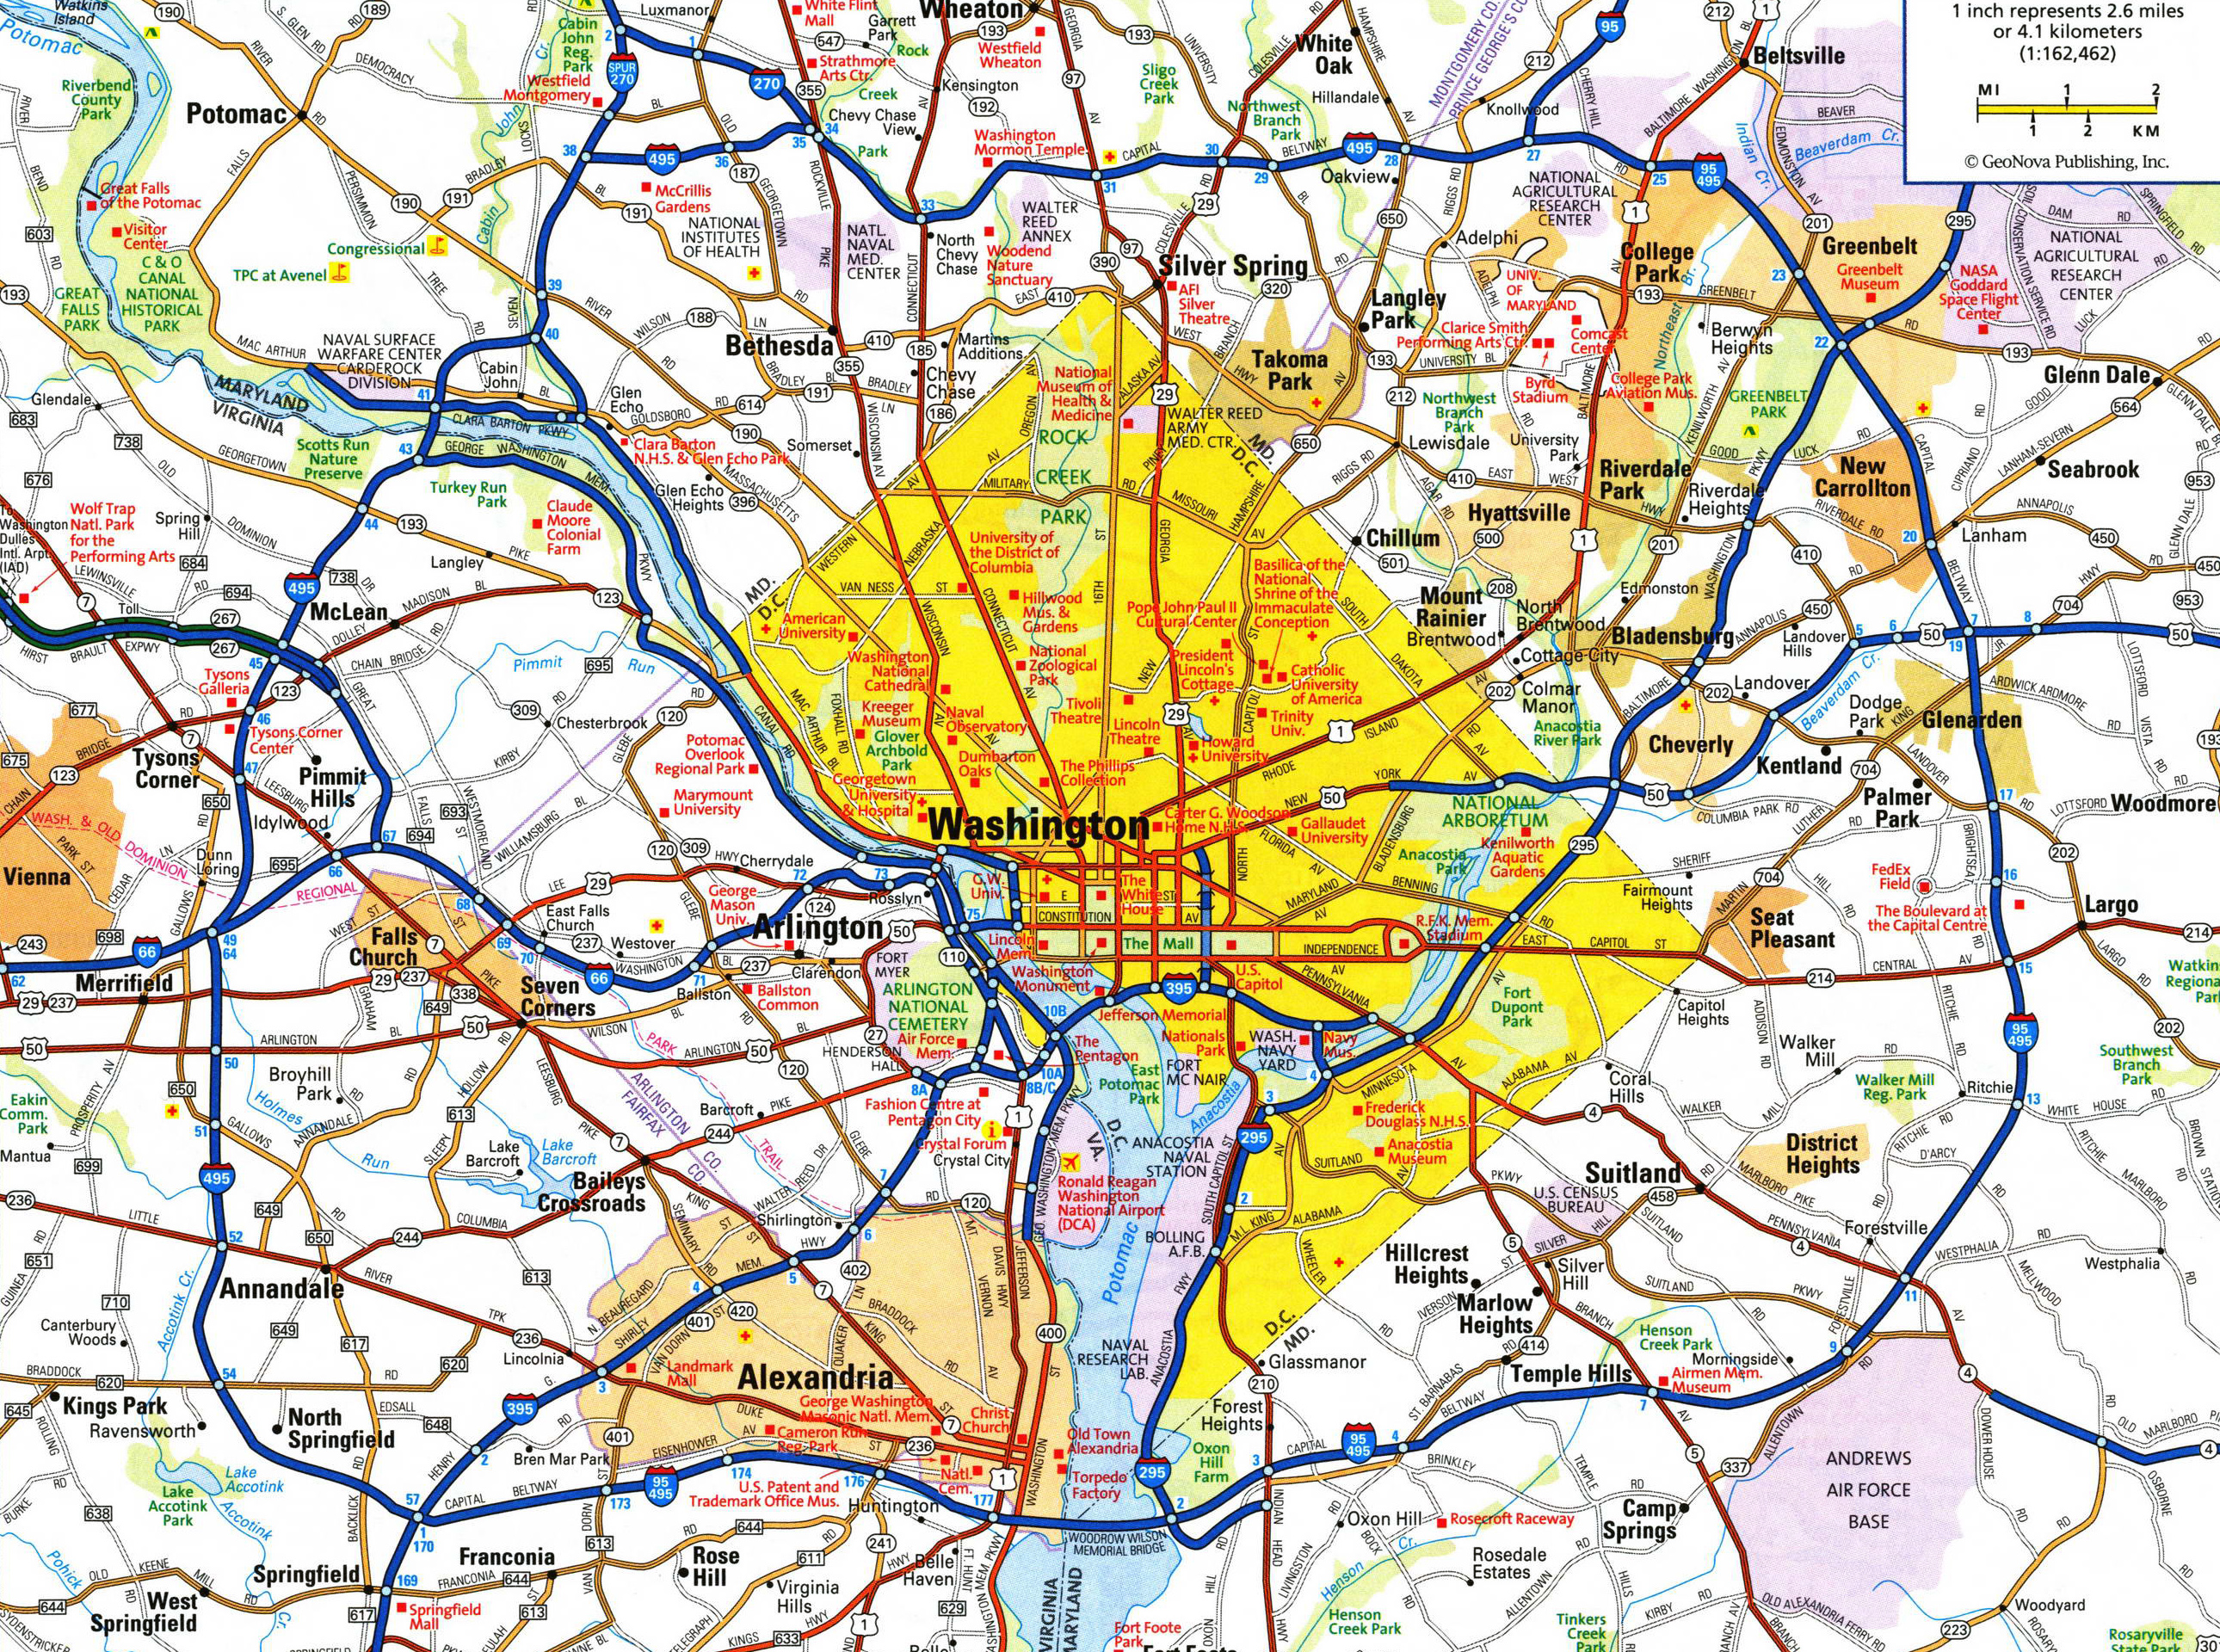 large-detailed-roads-and-highways-map-of-washington-d-c-area-vidiani